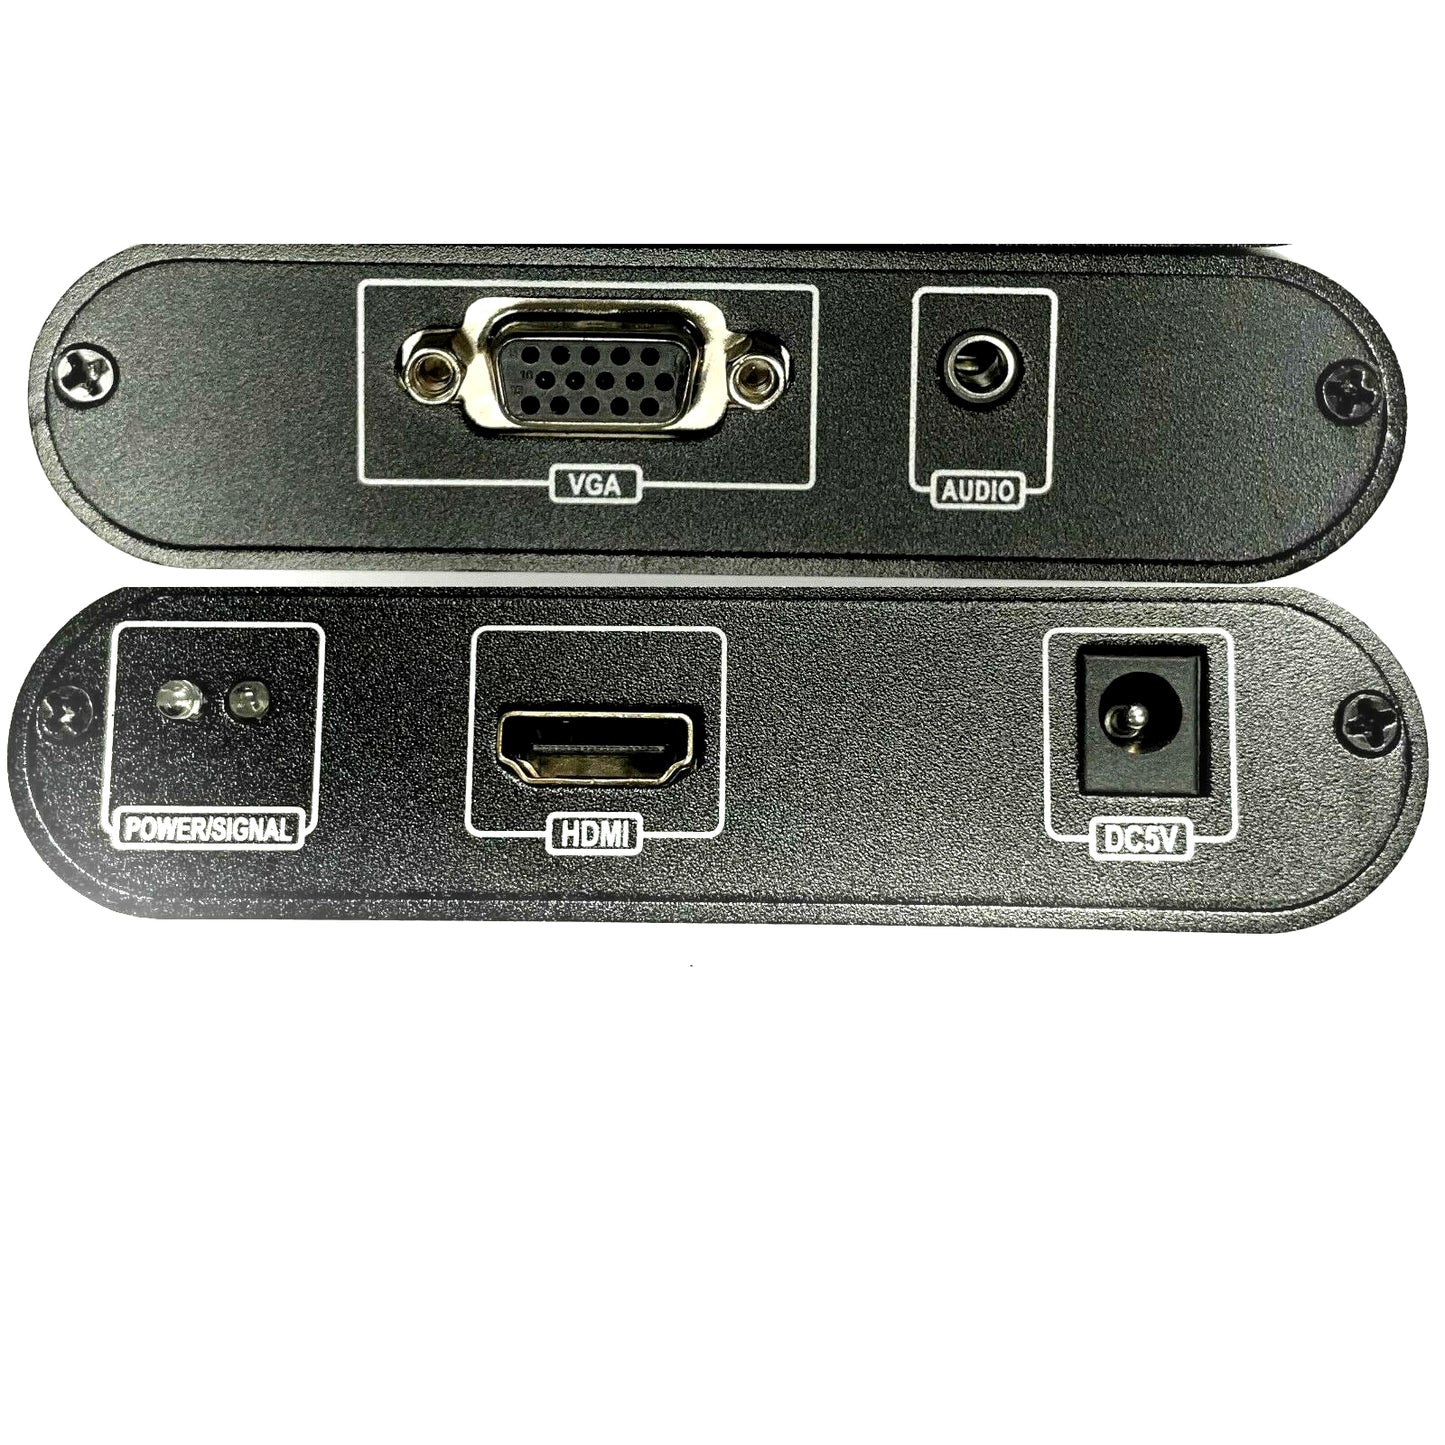 HDMI to VGA converter adapter + 3.5mm audio Jack full HD 1080P black for PC  iMac